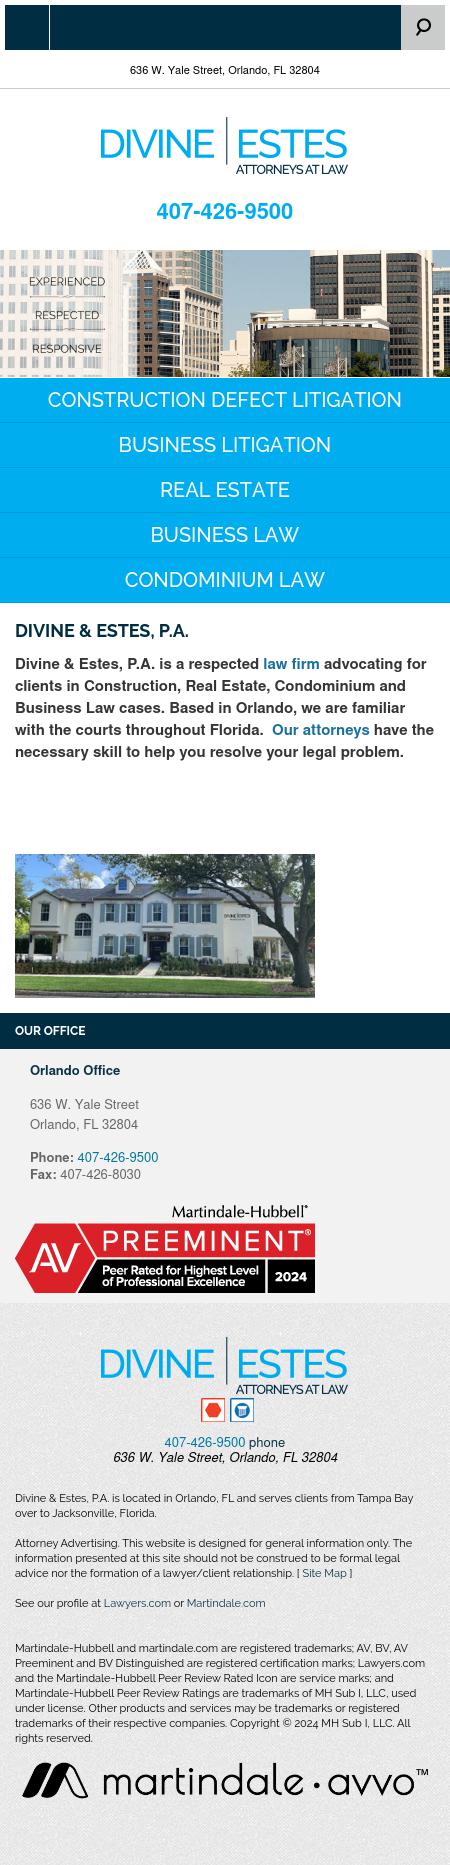 Divine & Estes PA - Orlando FL Lawyers